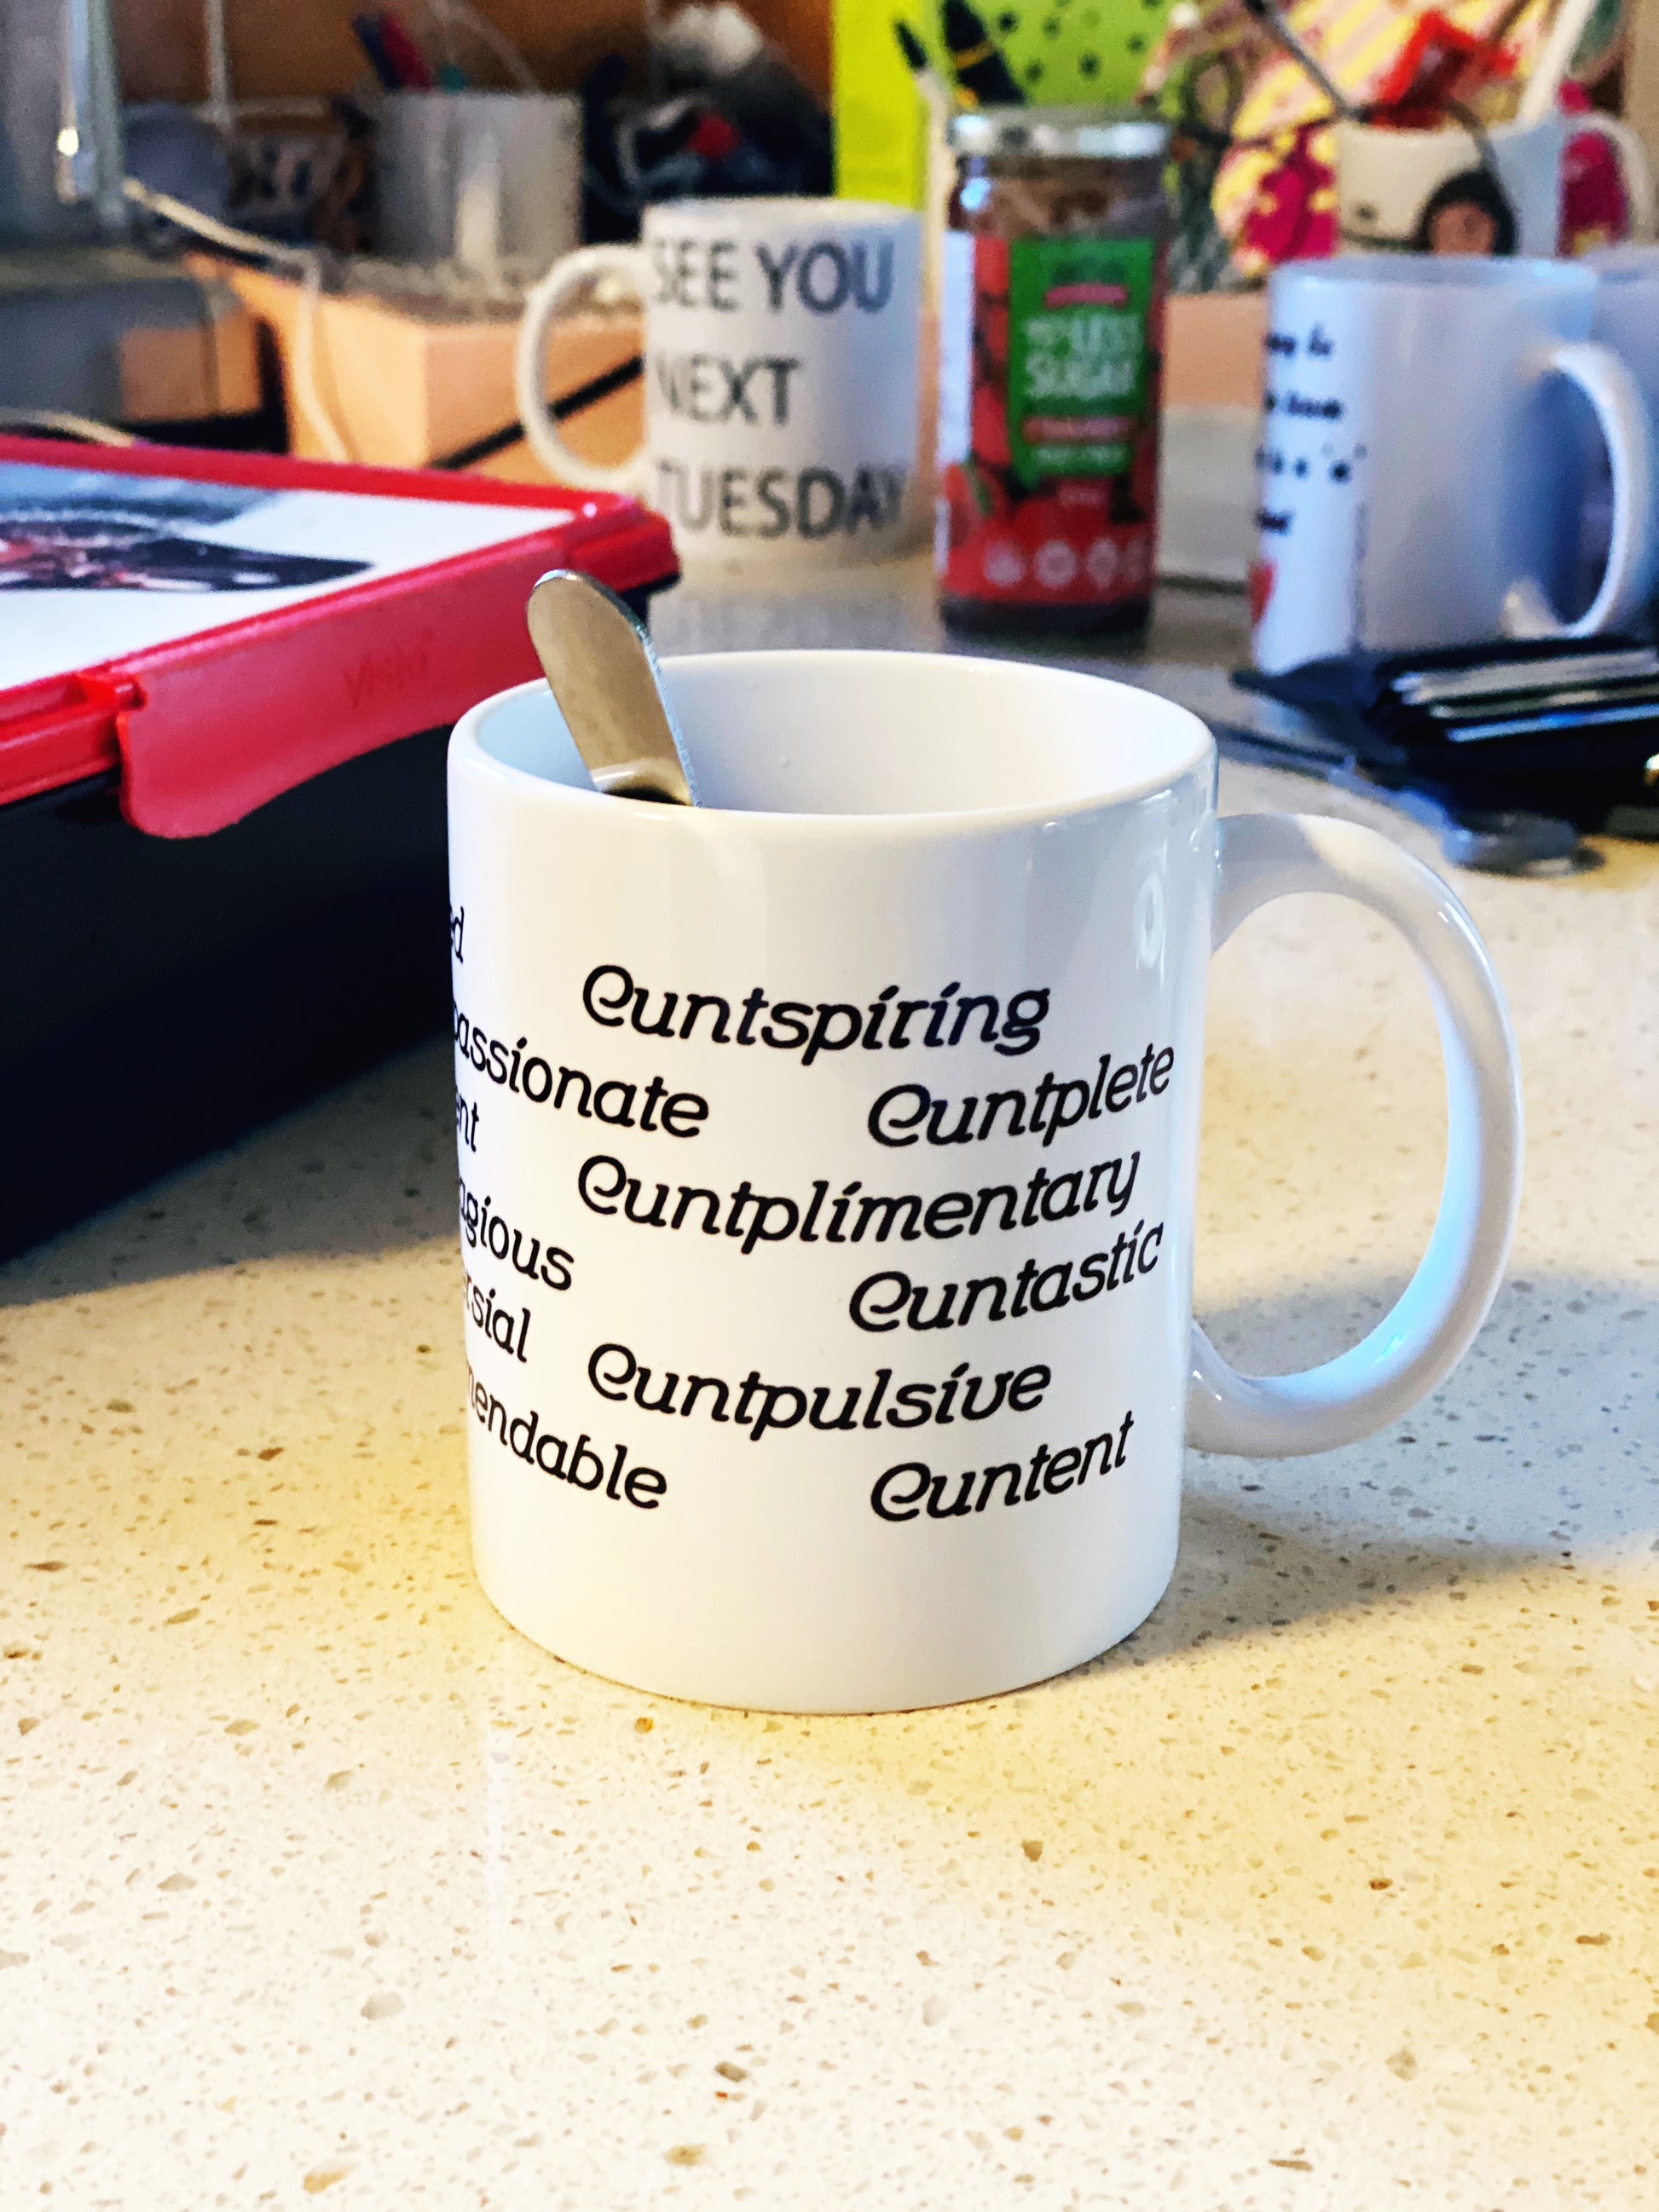 C—t Cup (cunt mug) nz